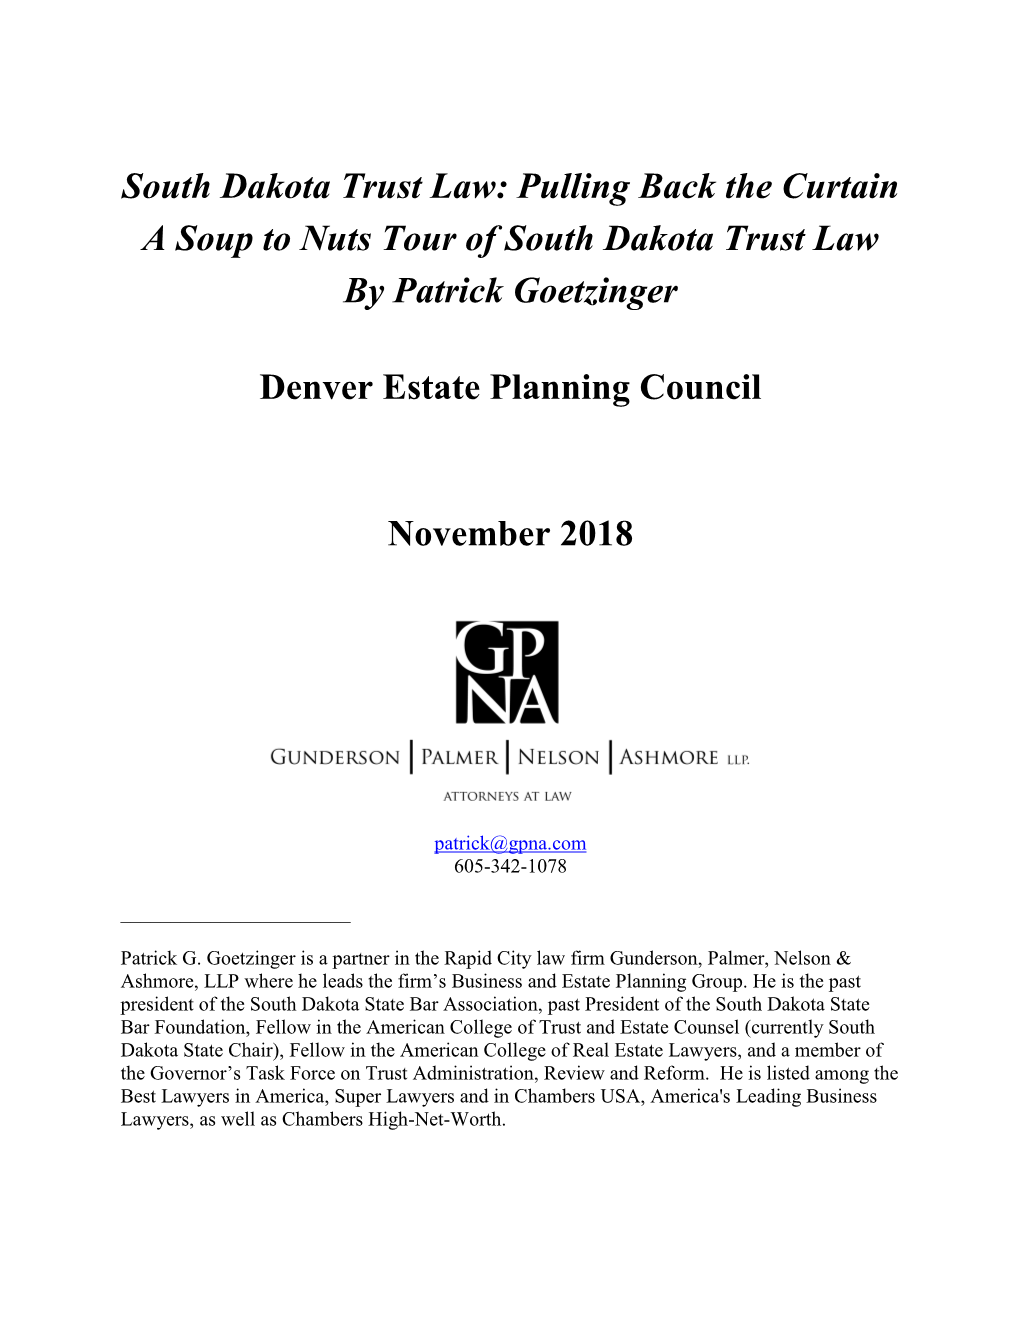 South Dakota Trust Law: Pulling Back the Curtain a Soup to Nuts Tour of South Dakota Trust Law by Patrick Goetzinger